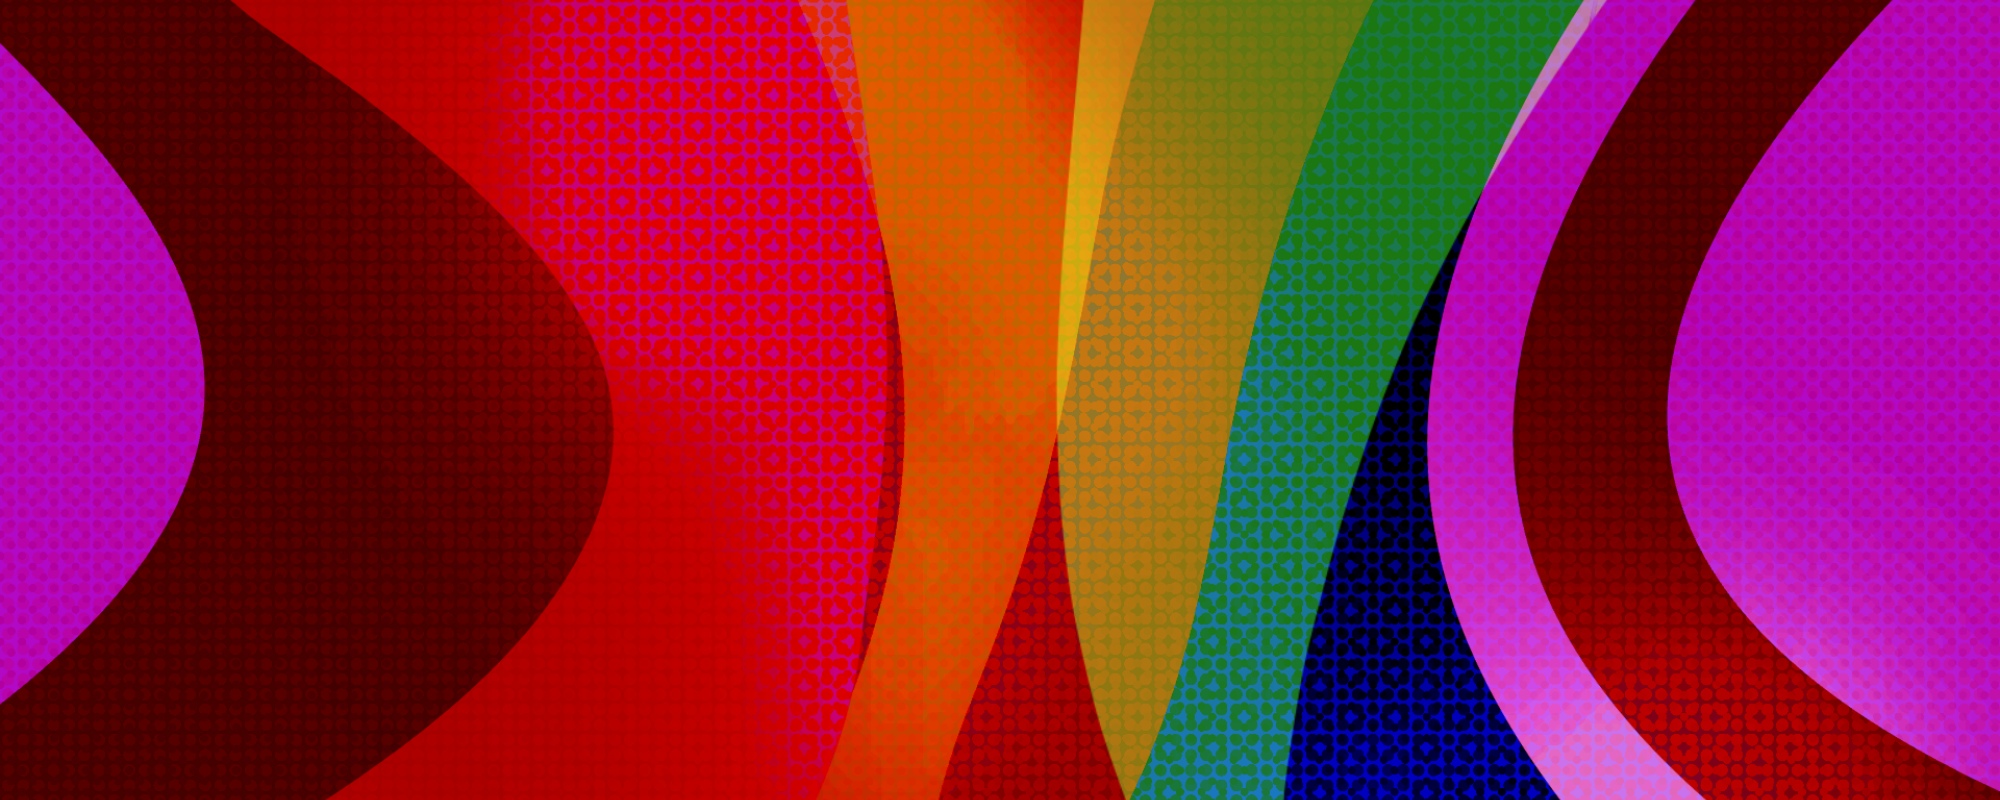 image of rainbow pattern